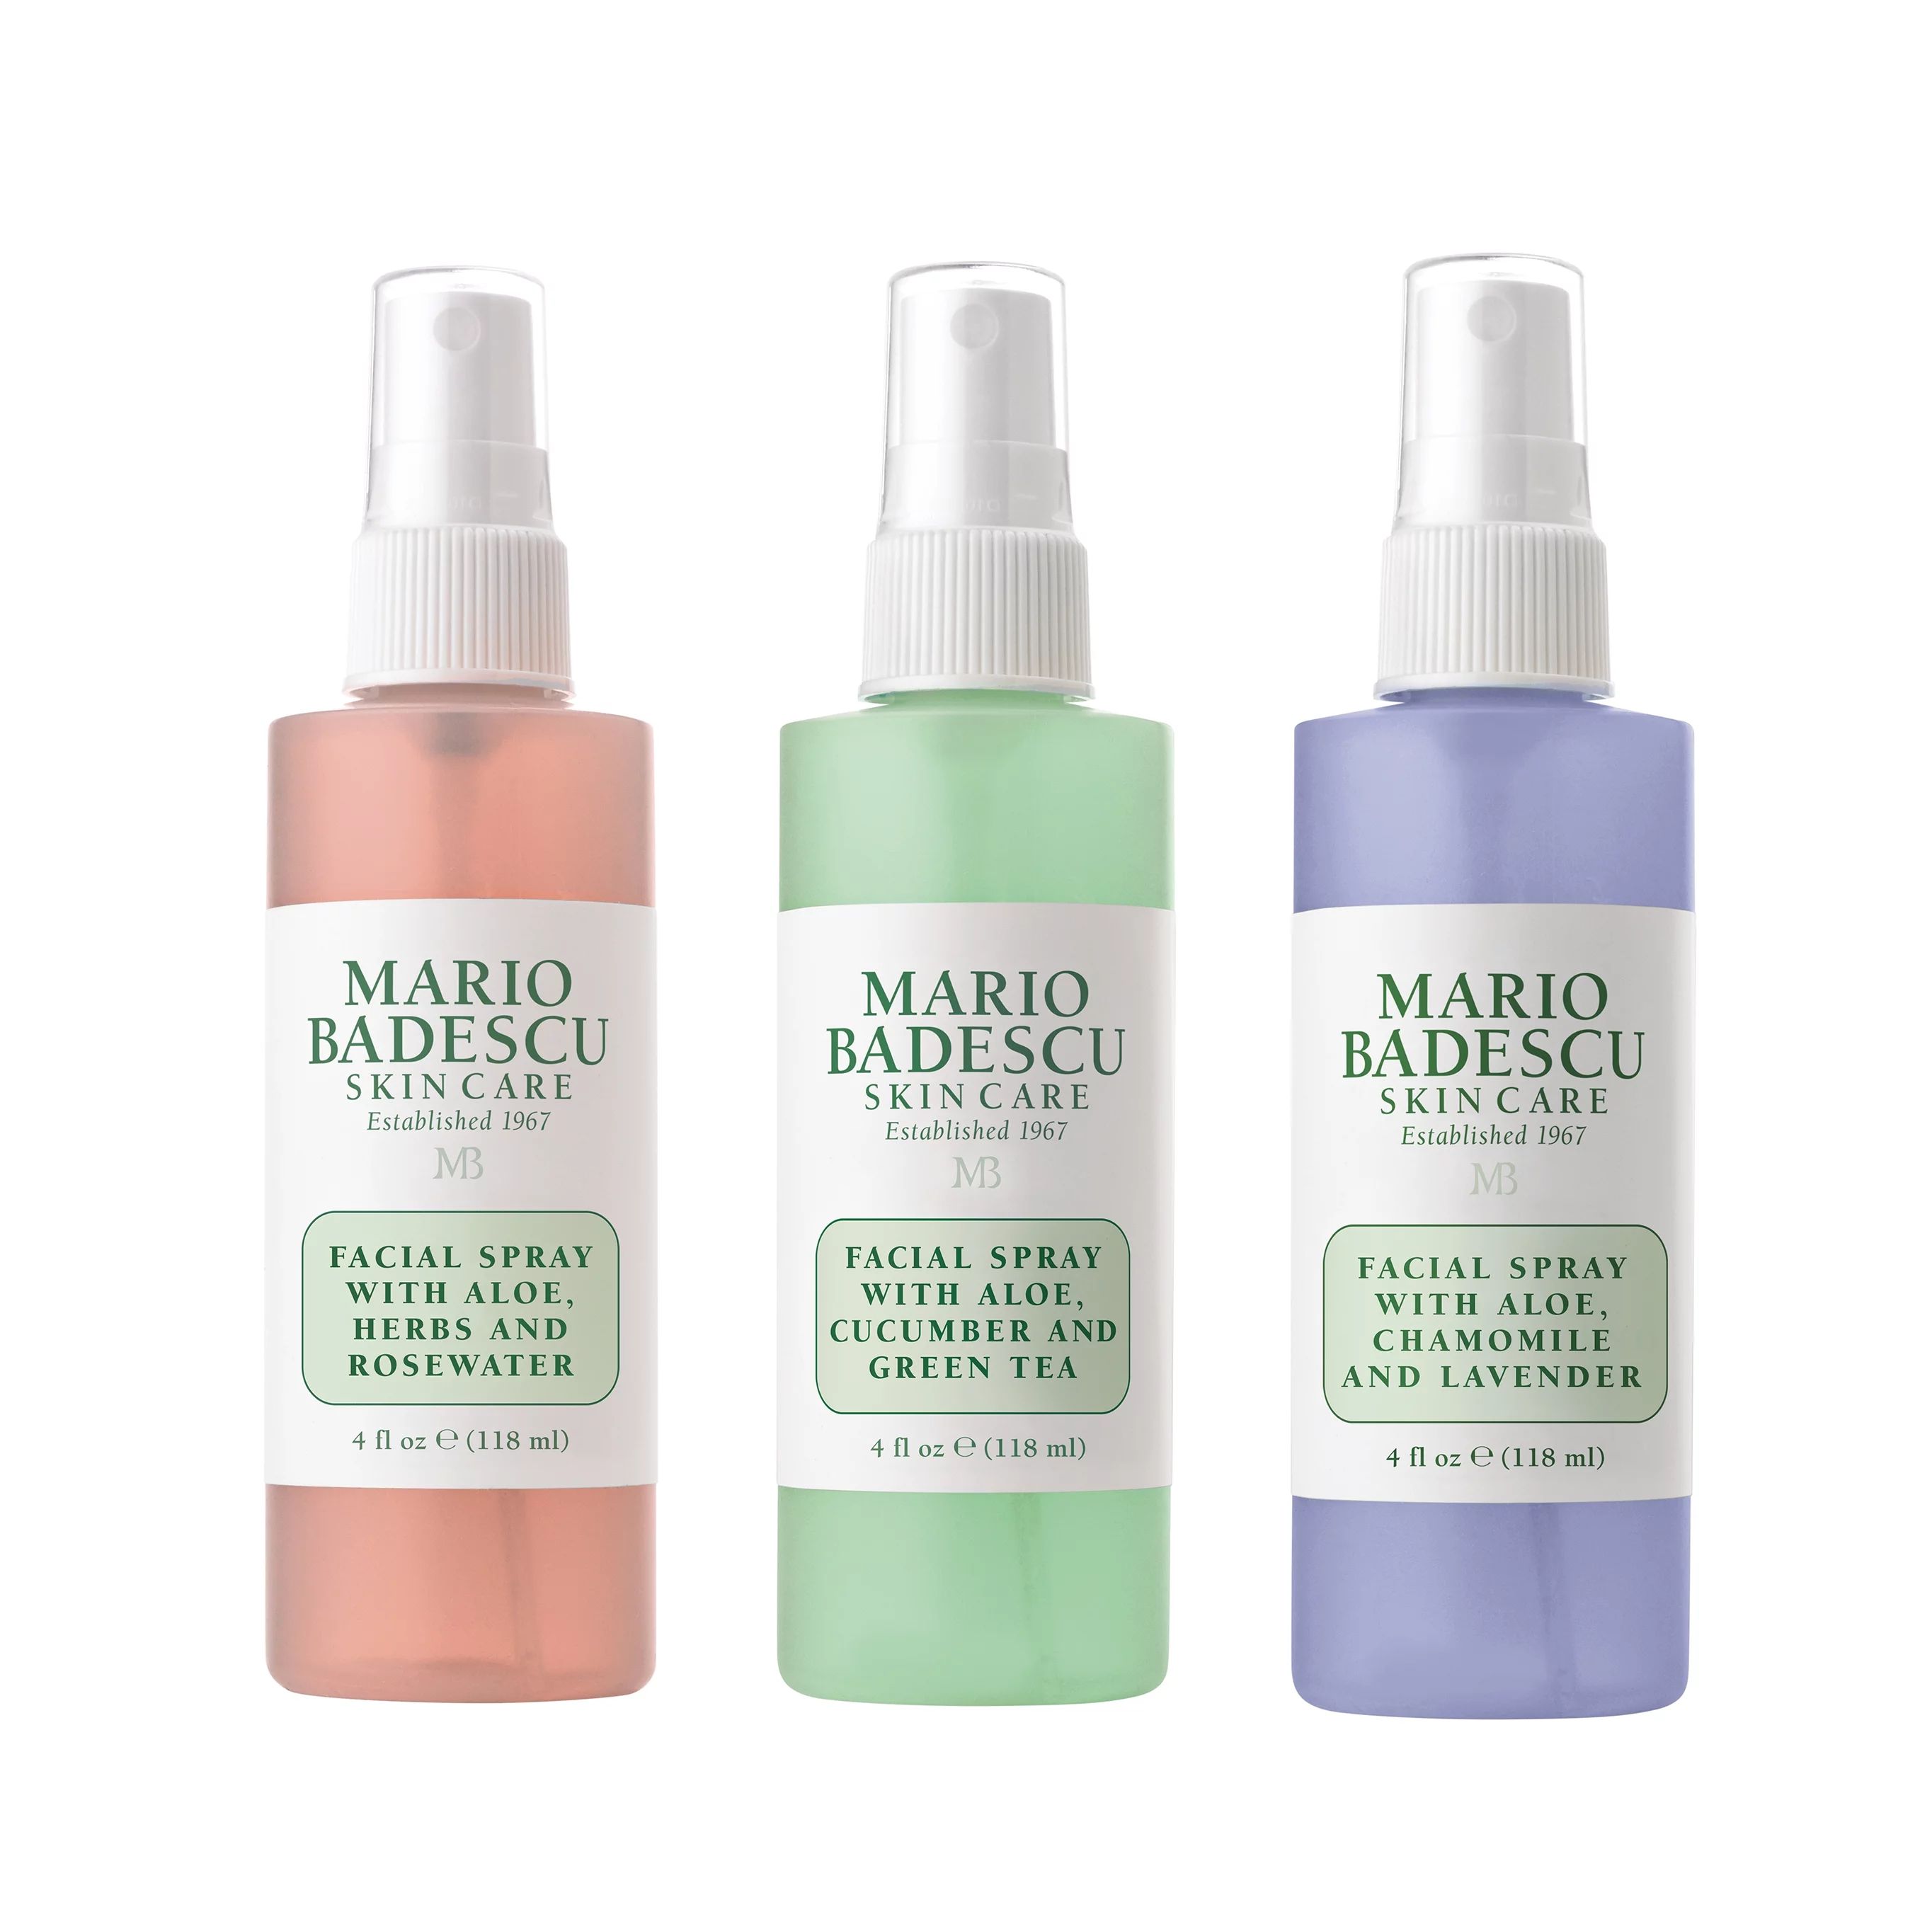 Mario Badescu Skin Care Facial Spray Spritz Mist Glow 3 Pieces Facial Spray Set, 4 fl oz | Walmart (US)